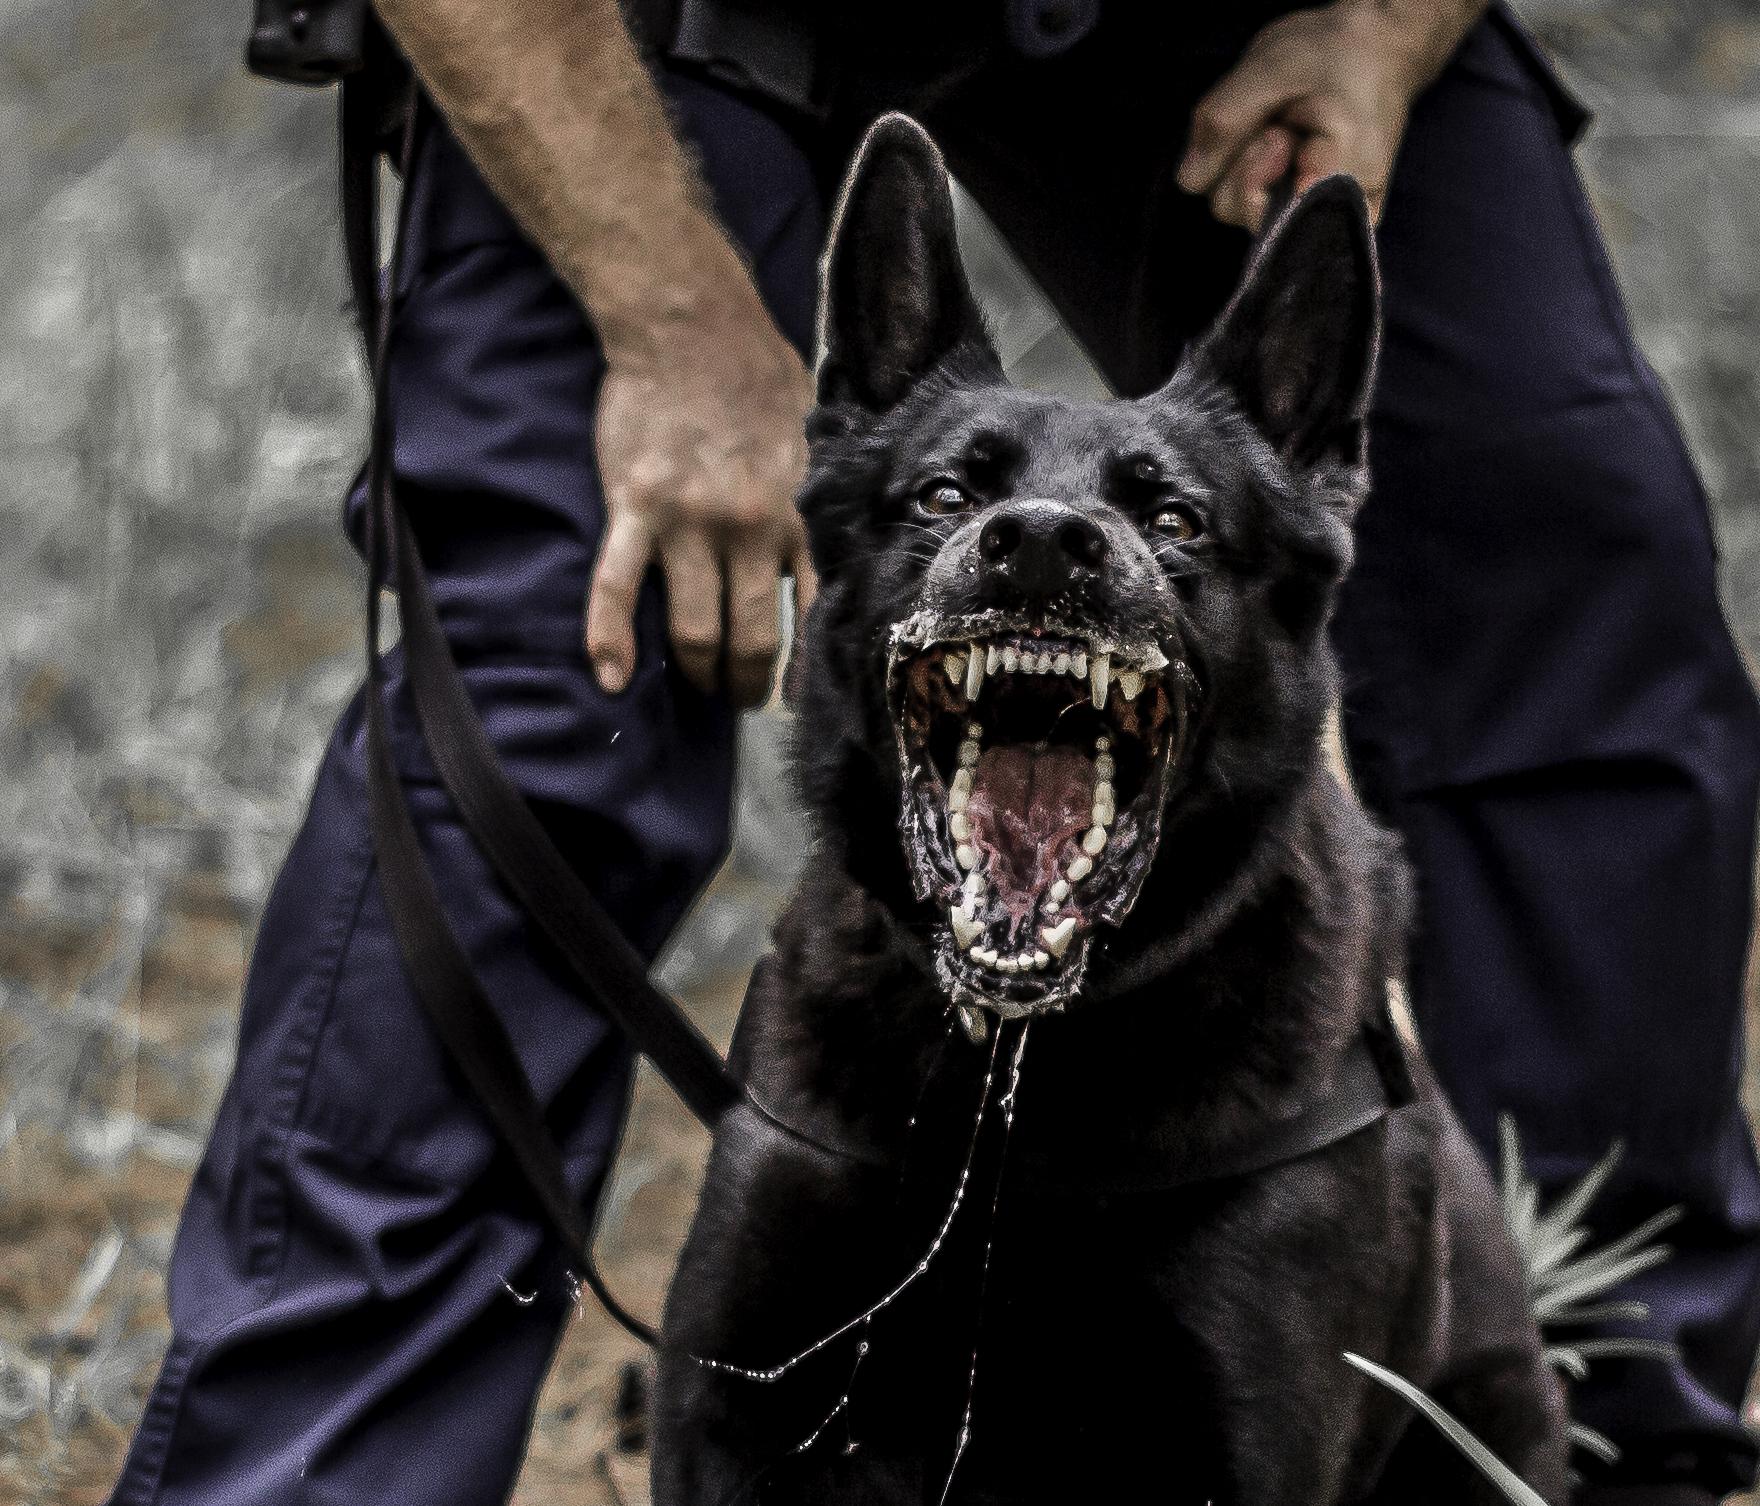 Professional K9 Attack Dog Training Gear & Equipment